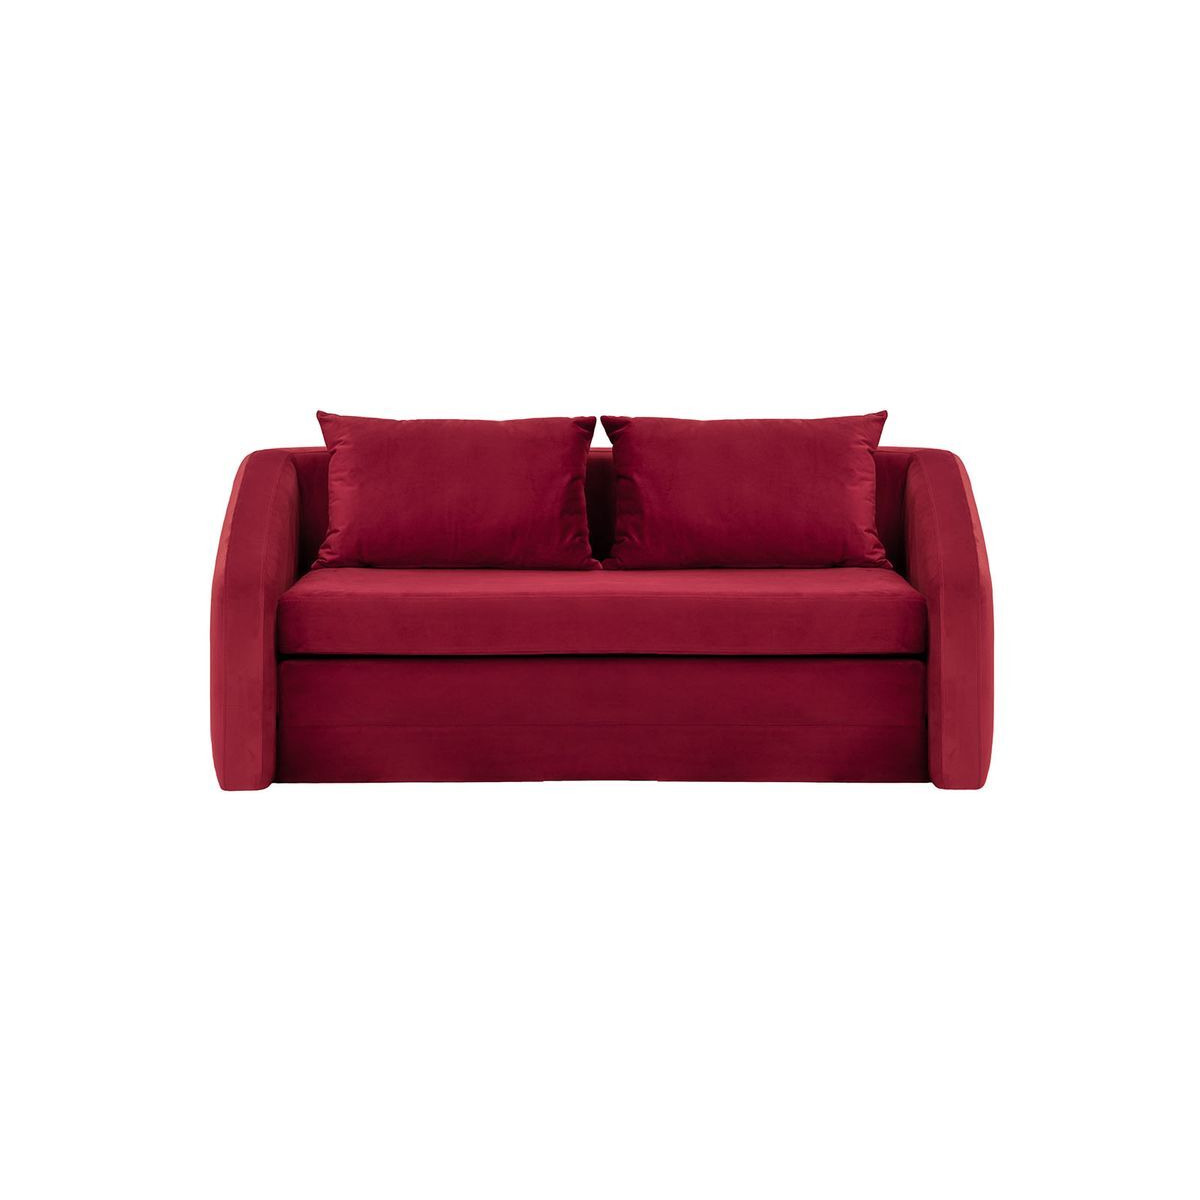 Alma 3 Seater Sofa Bed, dark red - image 1